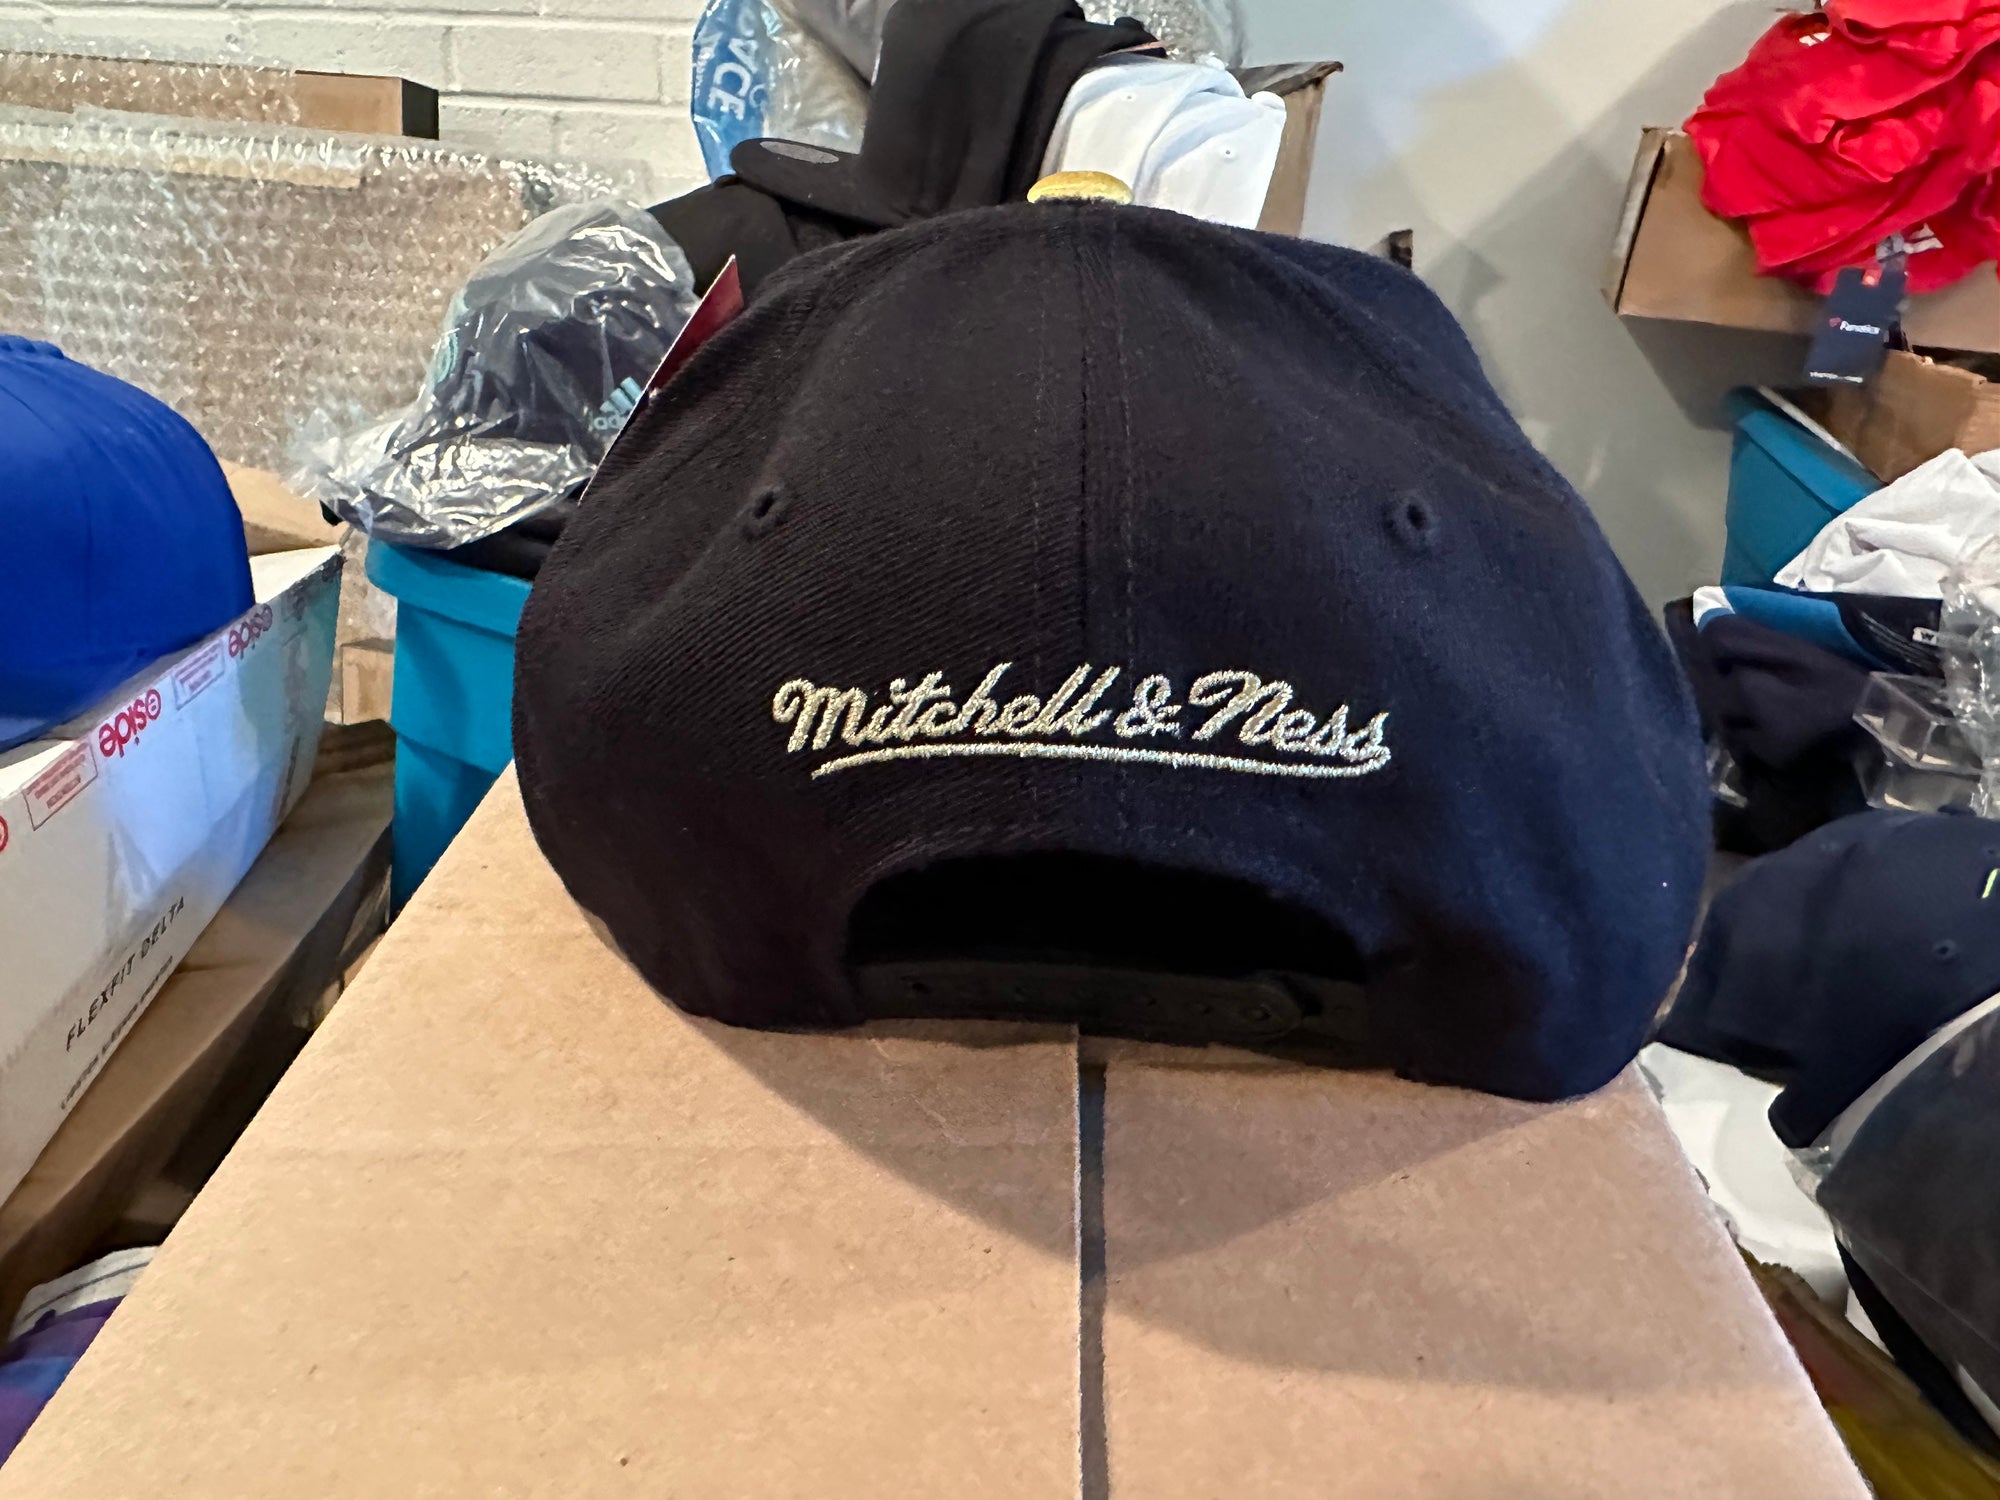 Men's Mitchell & Ness White/Gold Toronto Raptors Side Core 2.0 Snapback Hat